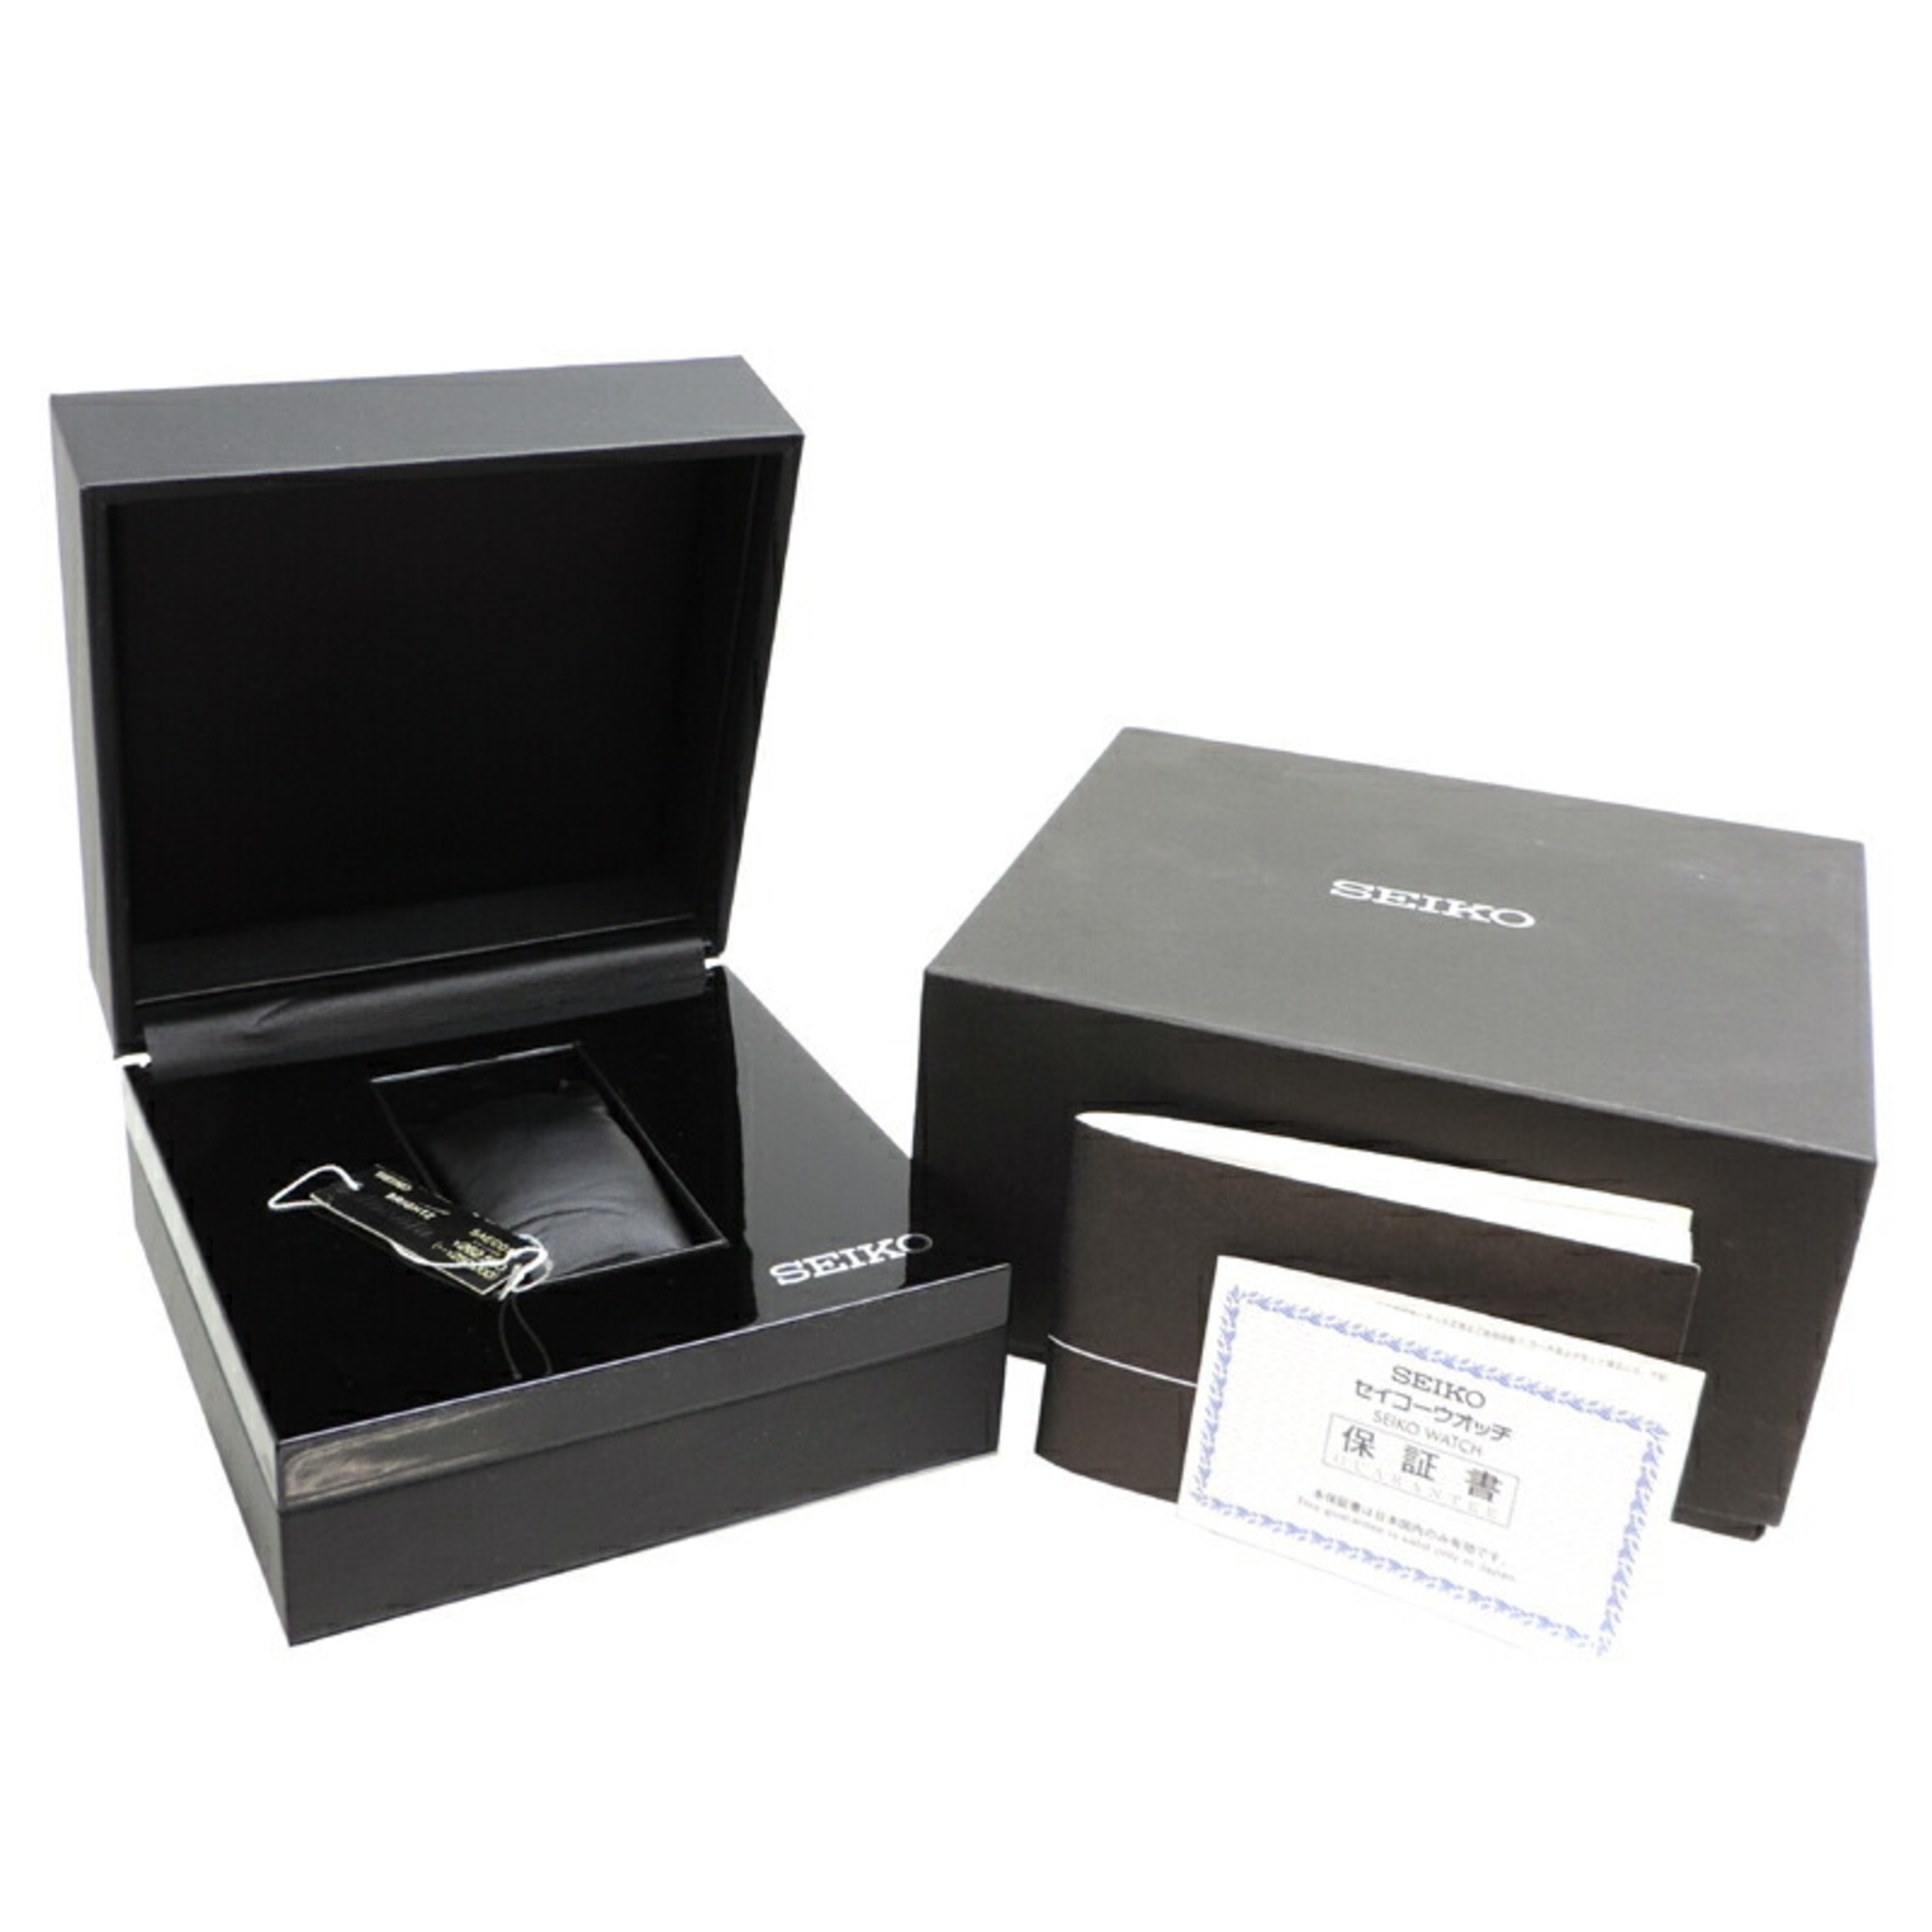 Seiko Brightz Ananta NS_CONCEPT Model Limited to 1000 pieces worldwide Men's Watch SAEC013 (6R21-00F0)